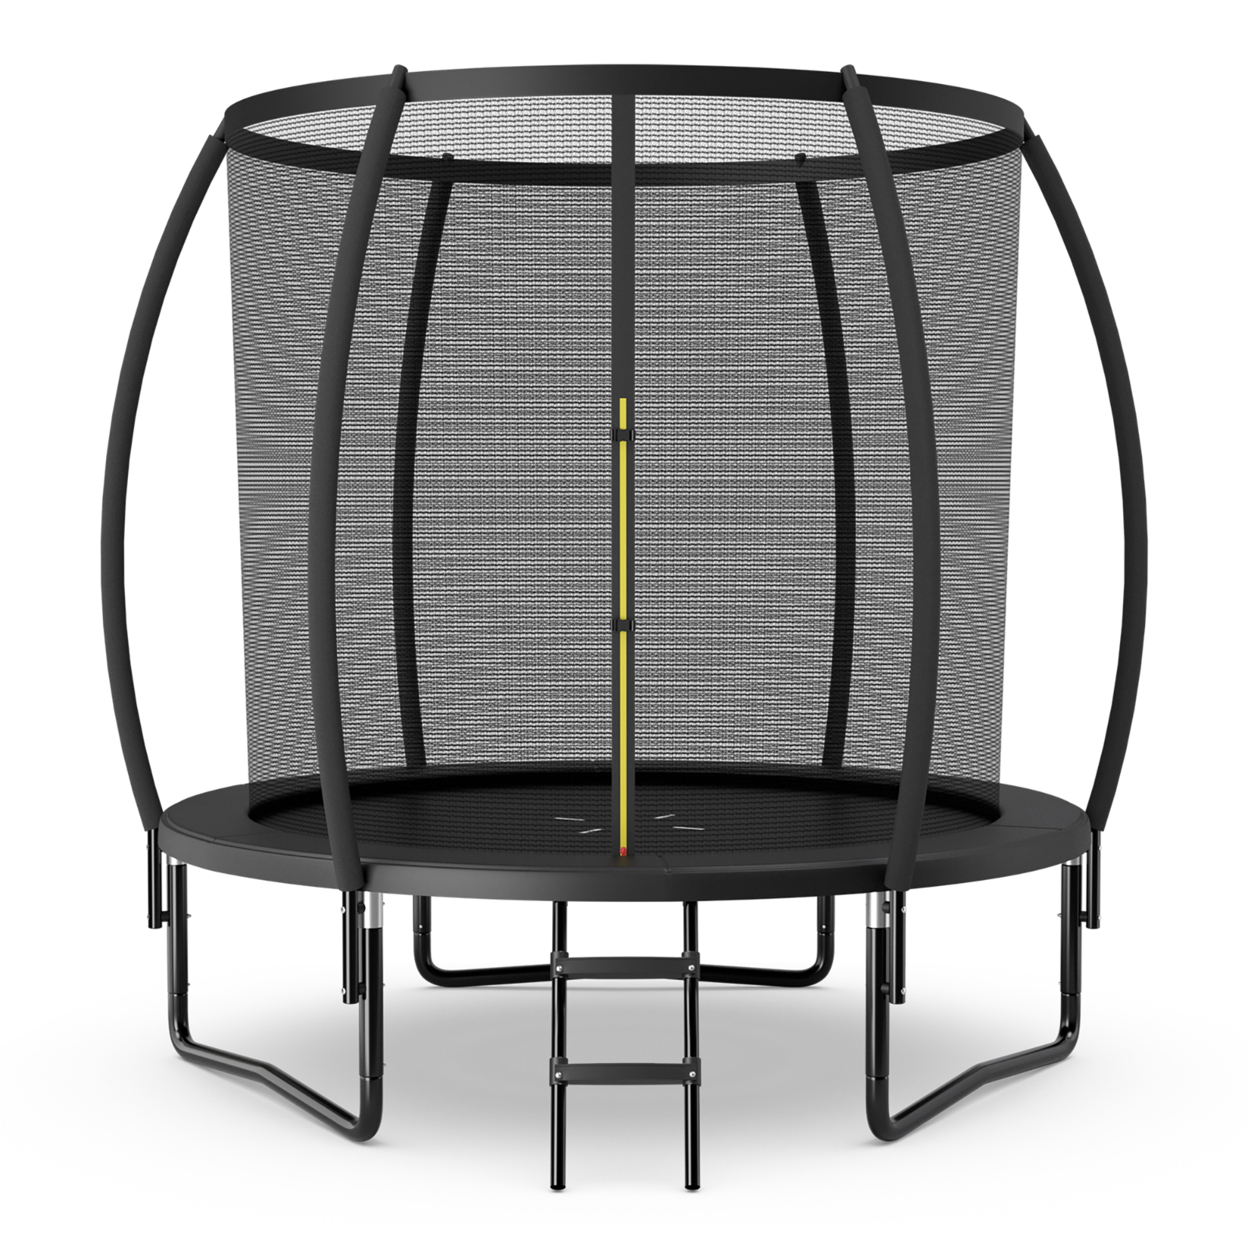 12FT Recreational Trampoline W/ Ladder Enclosure Net Safety Pad Outdoor - Black